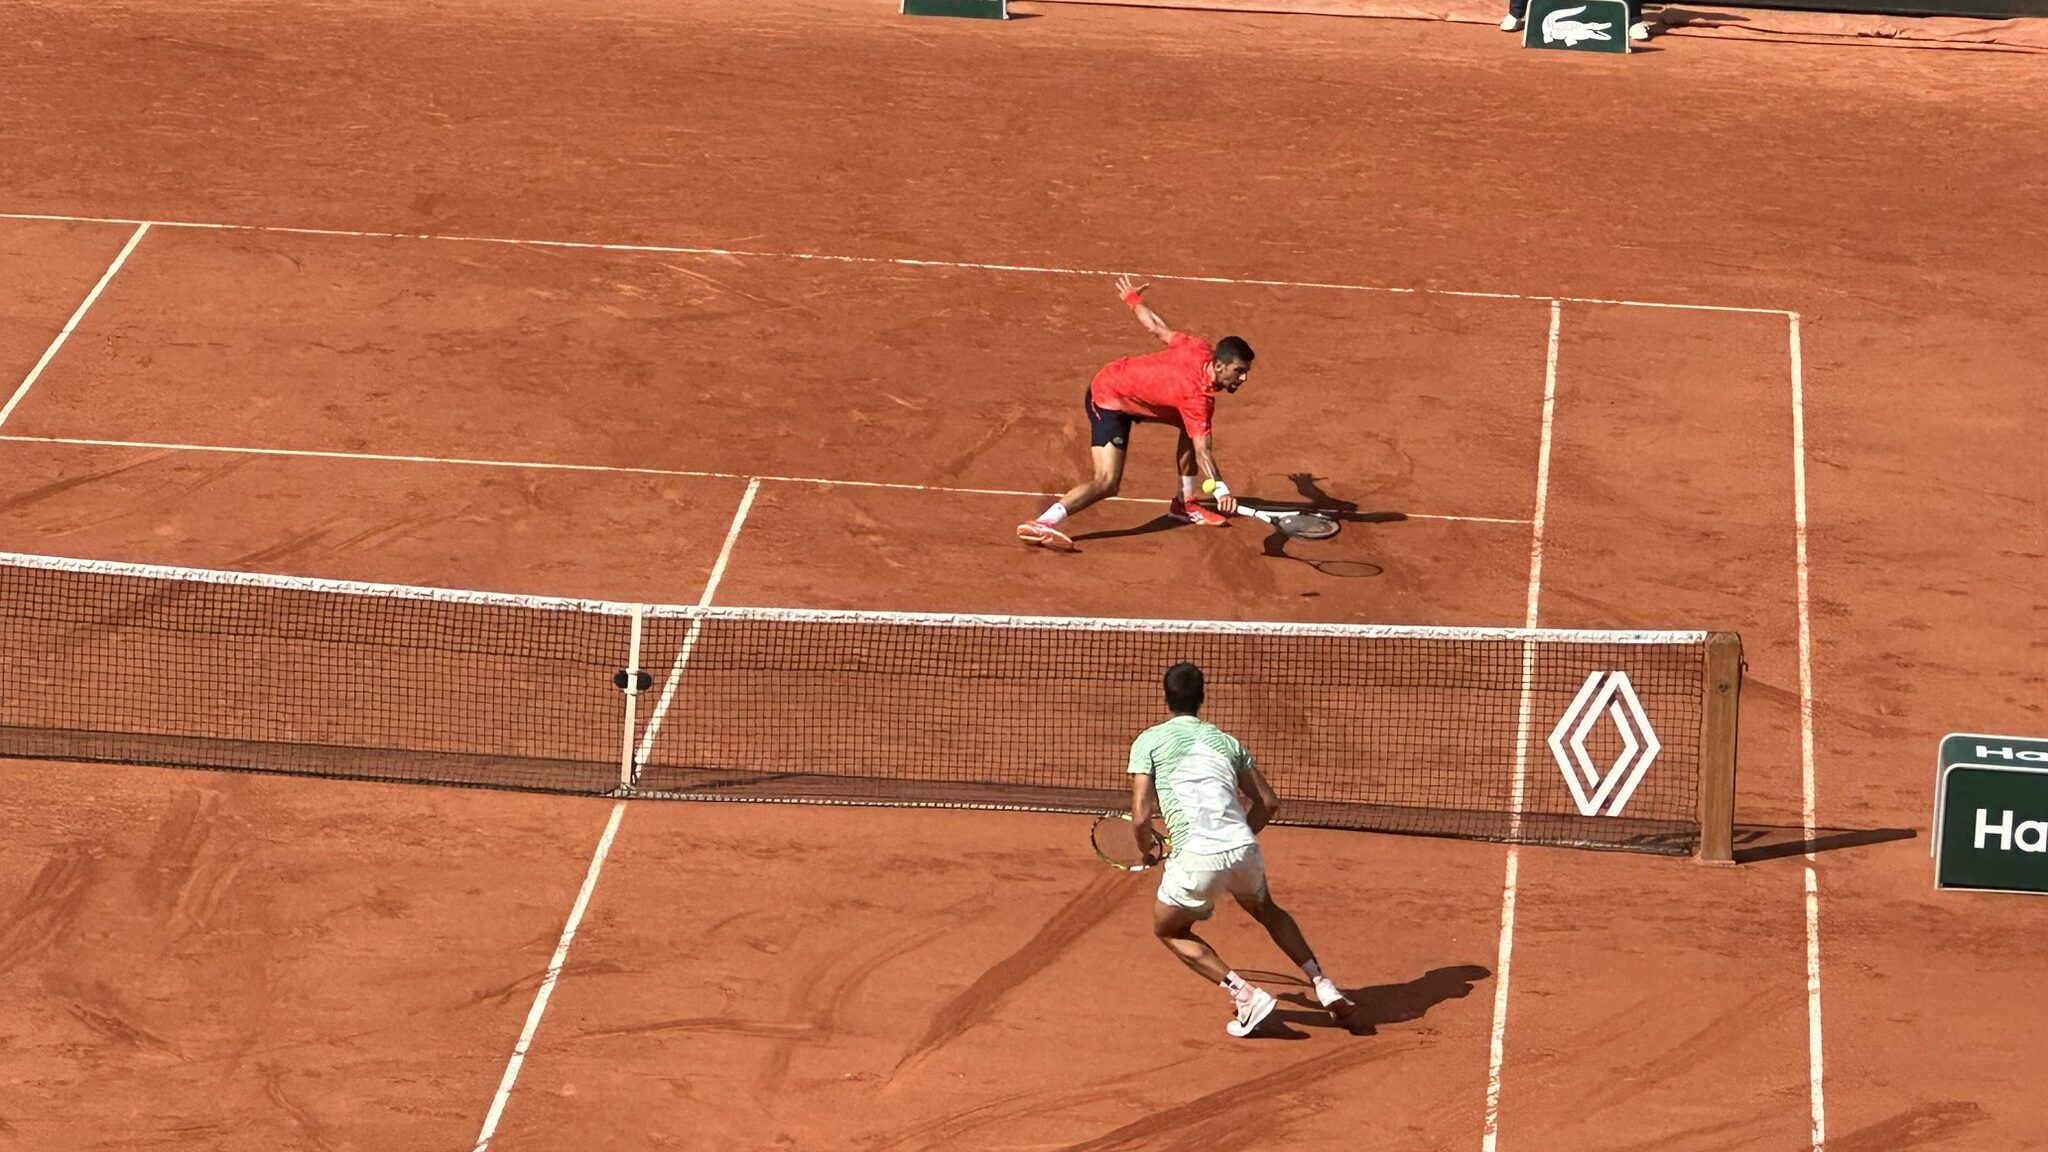 Top seed Djokovic hits form in Dubai - Tennis Majors